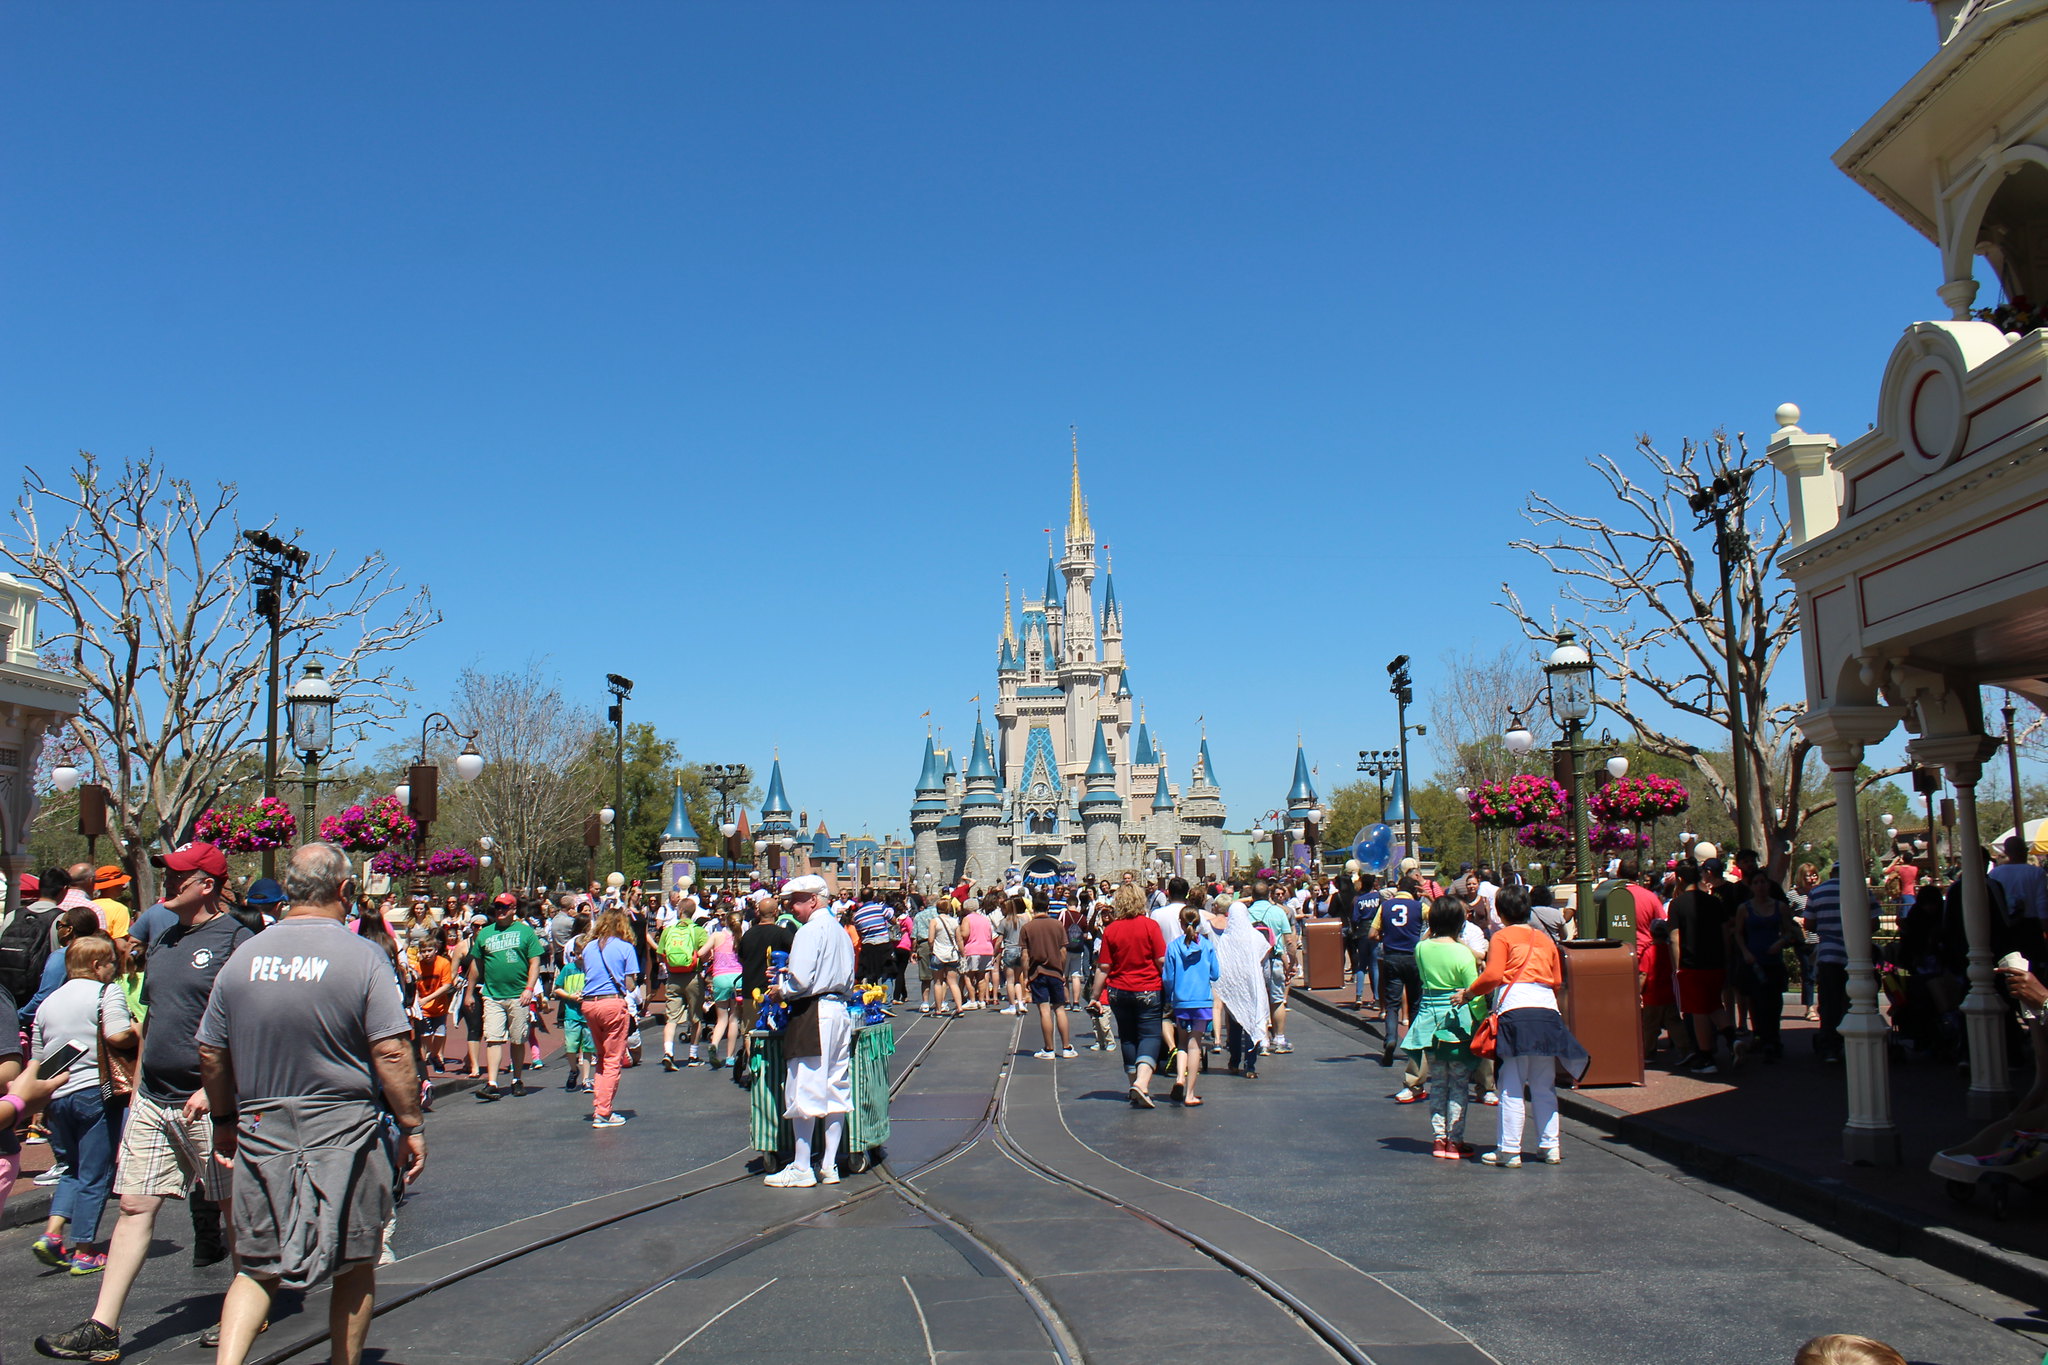 Main Street, Disney's Magic Kingdom